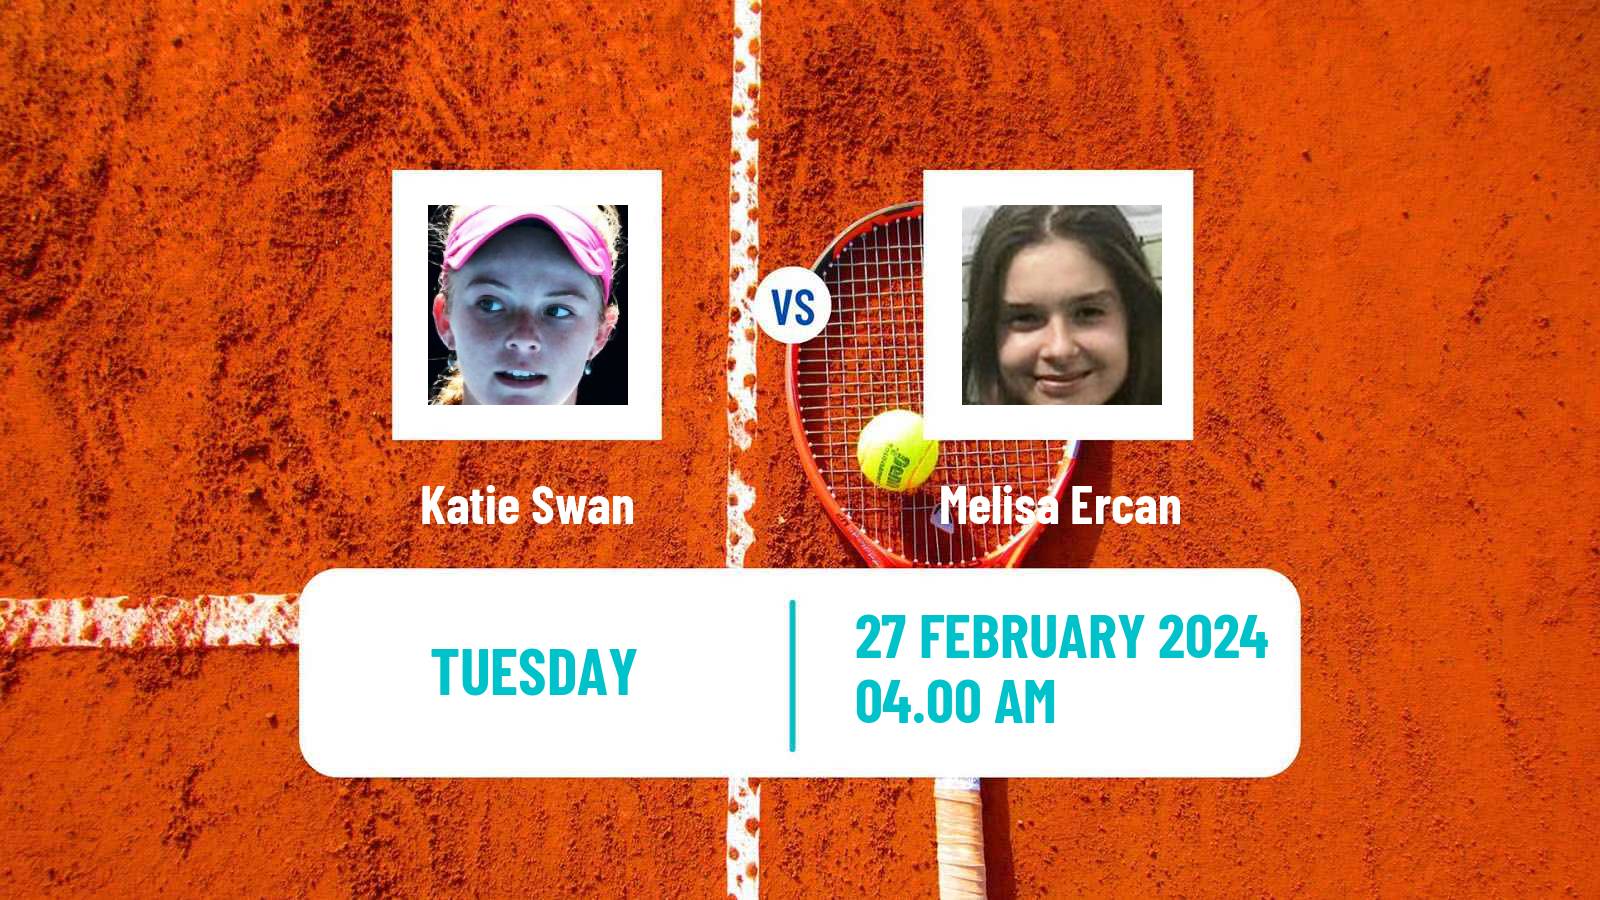 Tennis ITF W35 Traralgon 2 Women Katie Swan - Melisa Ercan